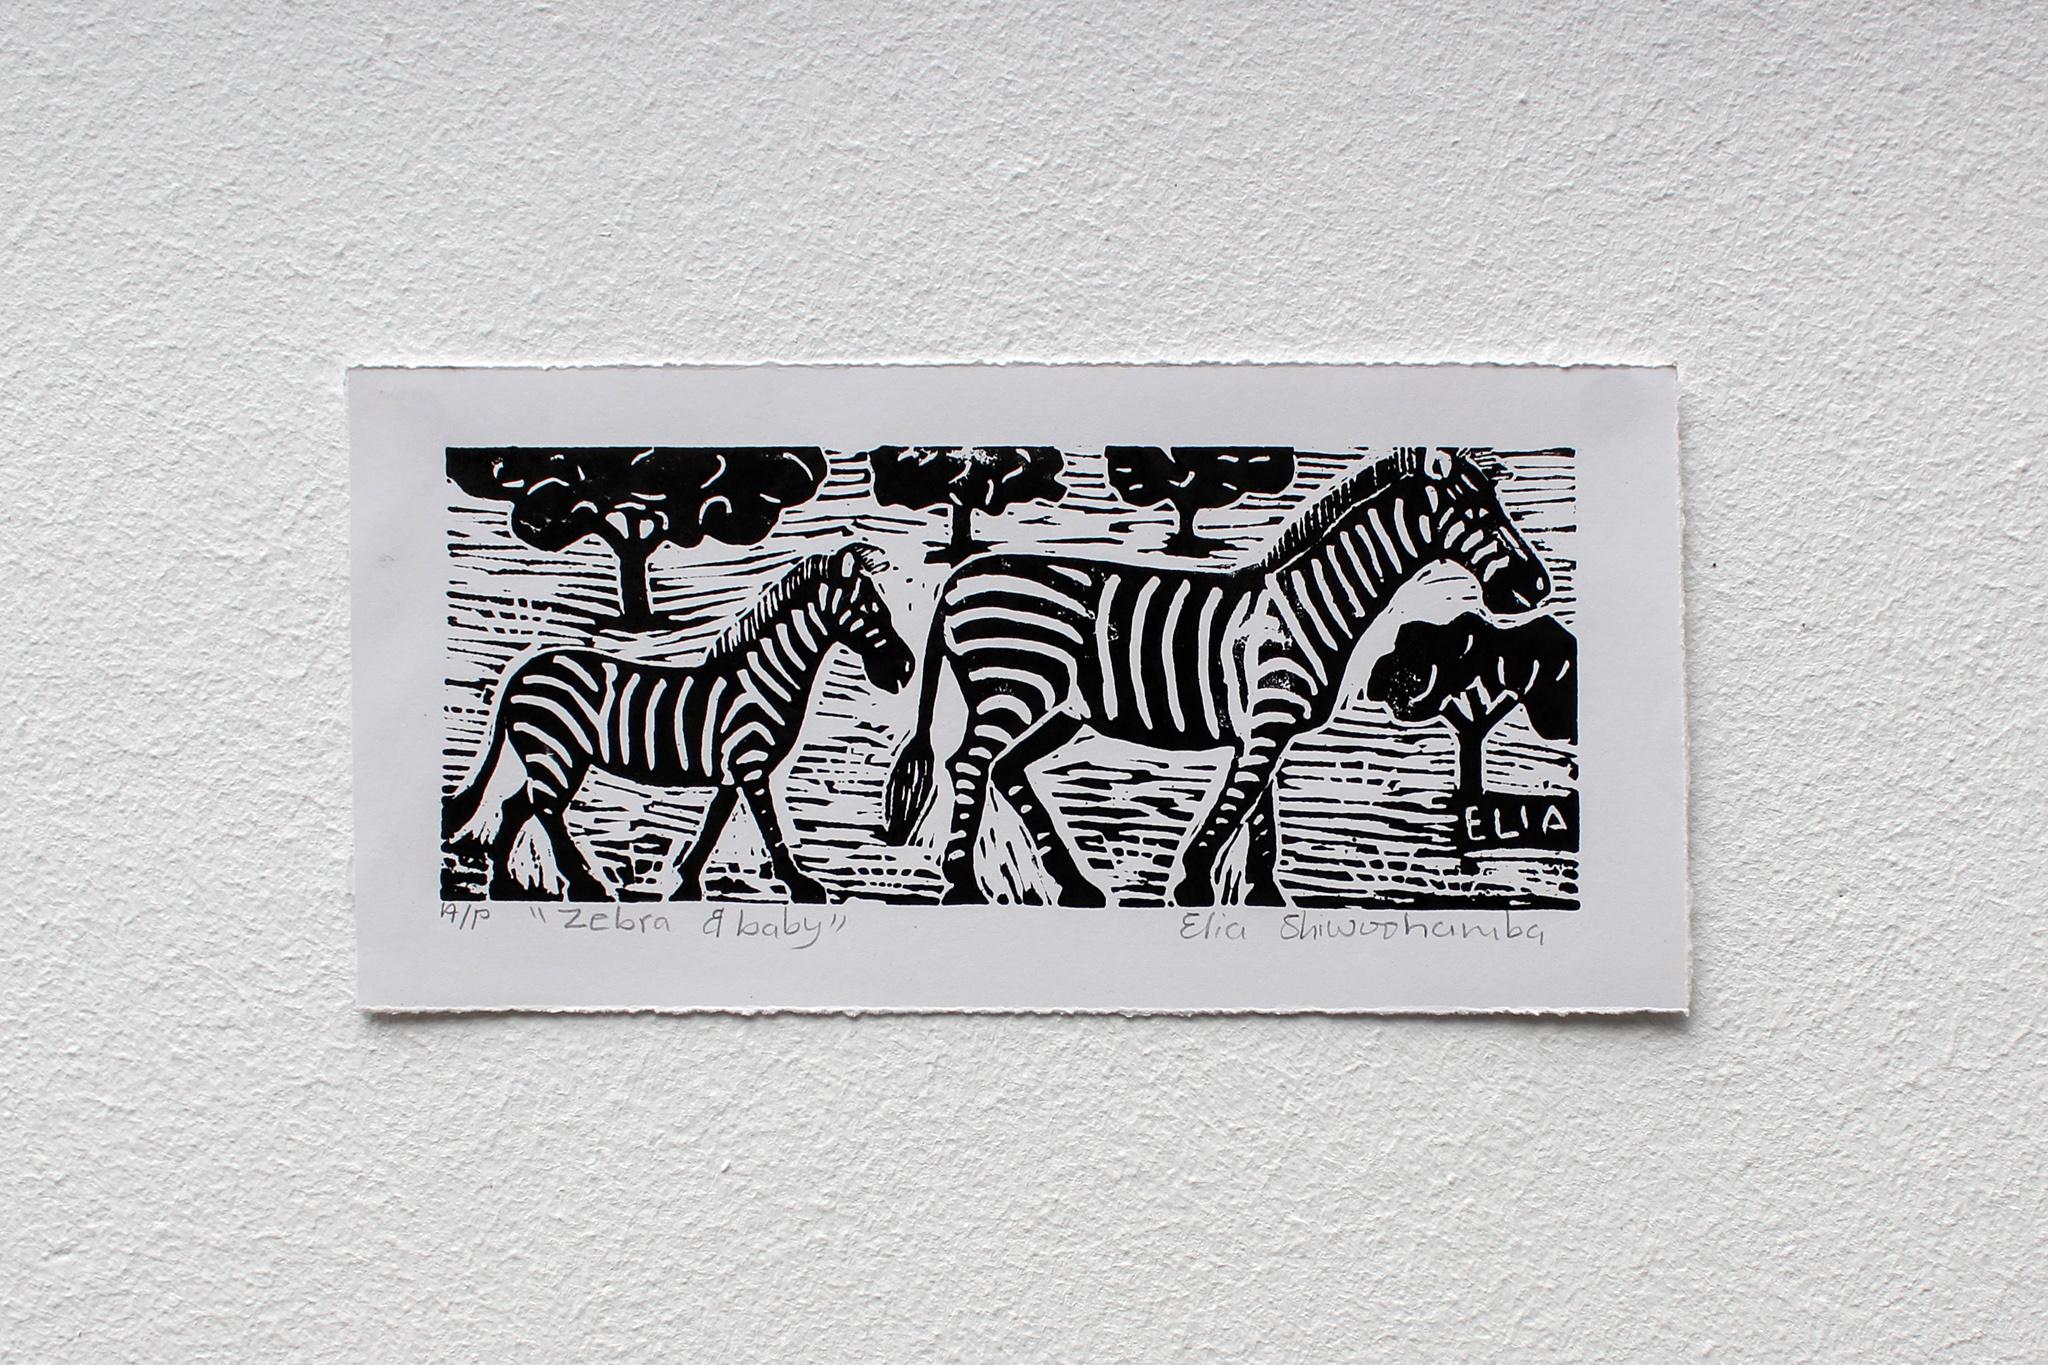 Zebra and baby, Elia Shiwoohamba, Linoleum block print